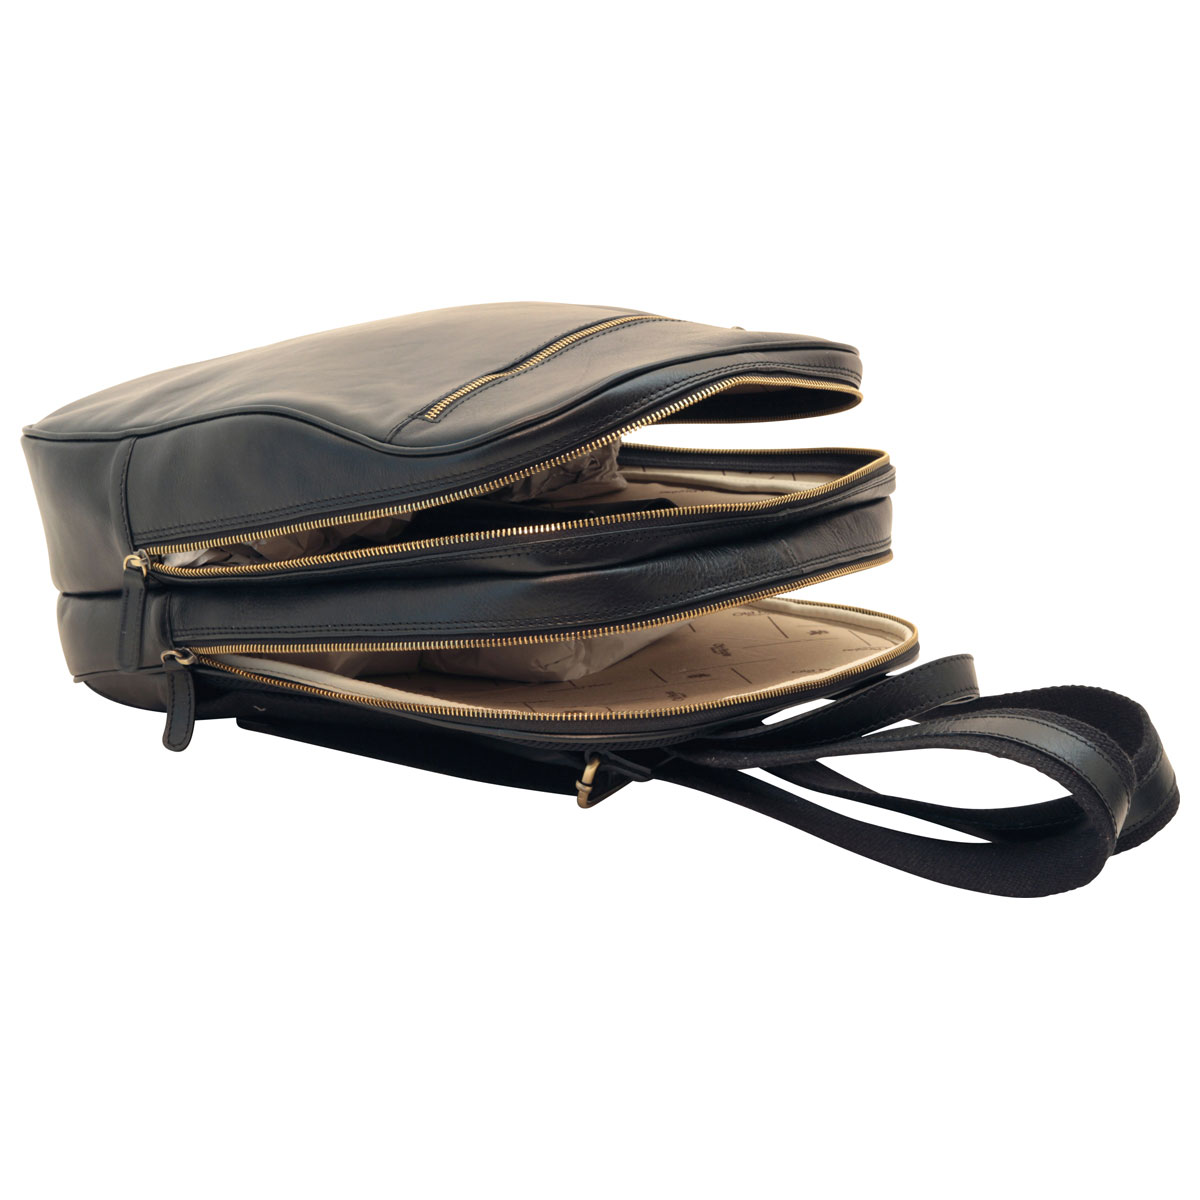 Leather backpack with exterior zip pockets - Black | 408089NE US | Old Angler Firenze